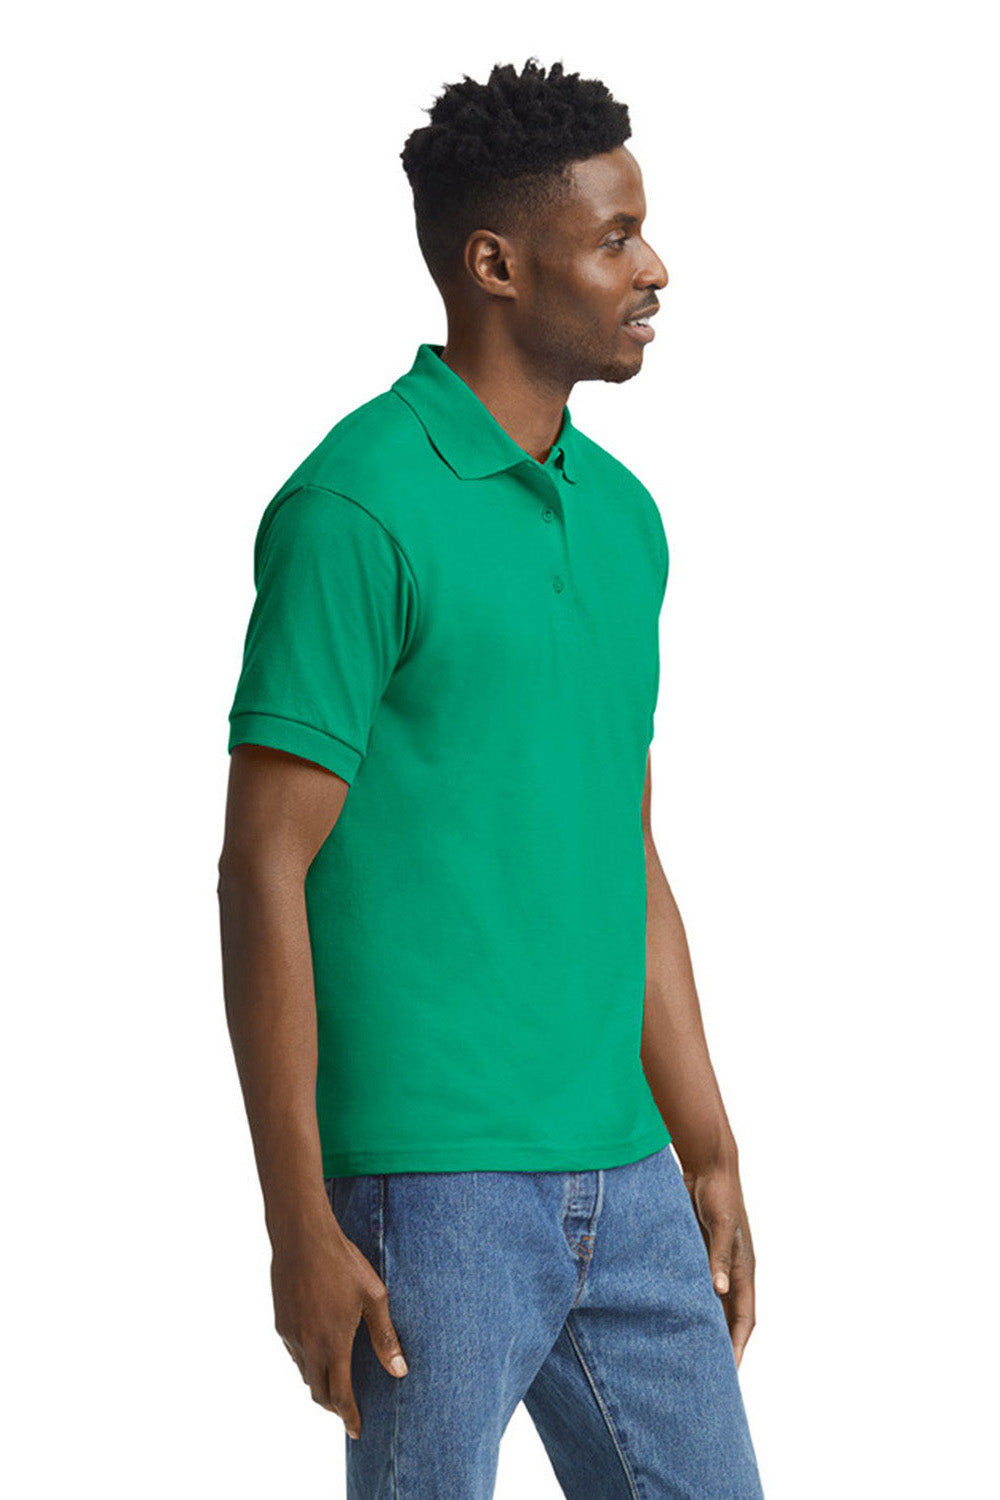 Gildan 8800/G880 Mens DryBlend Moisture Wicking Short Sleeve Polo Shirt Kelly Green SIde